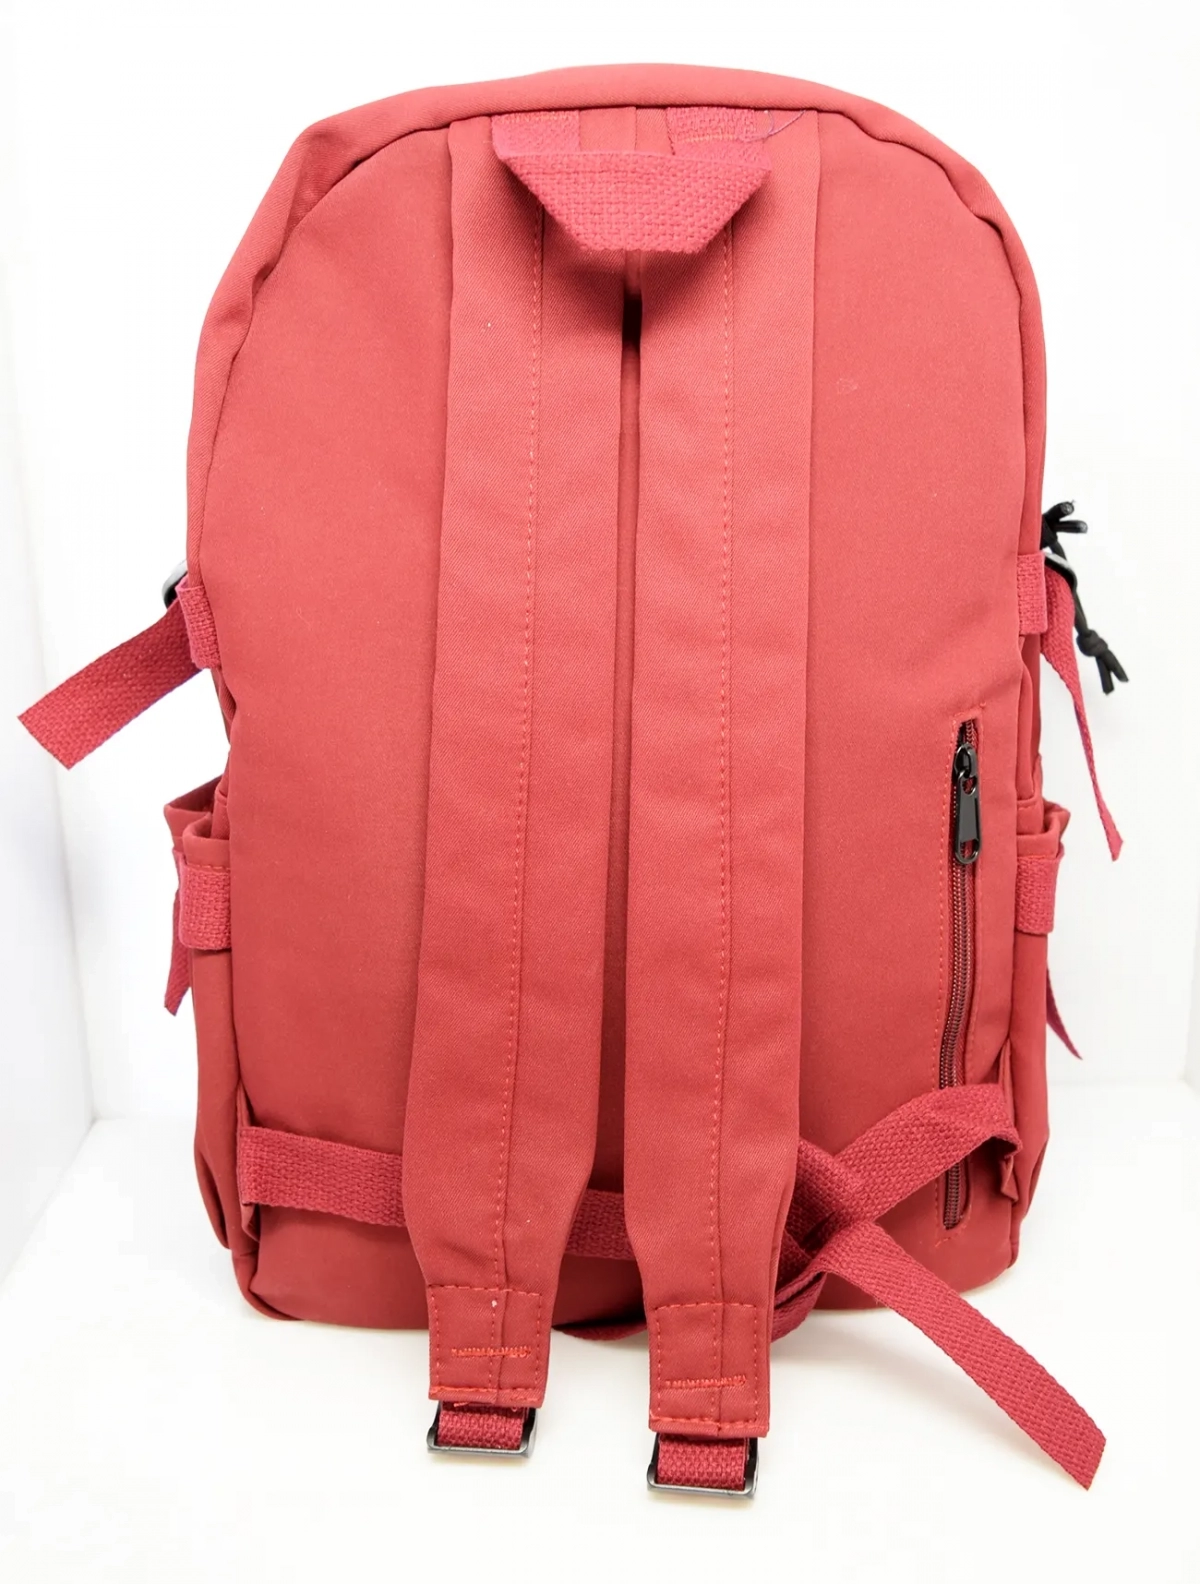 Рюкзак N-103-20 рюкзак бордовый